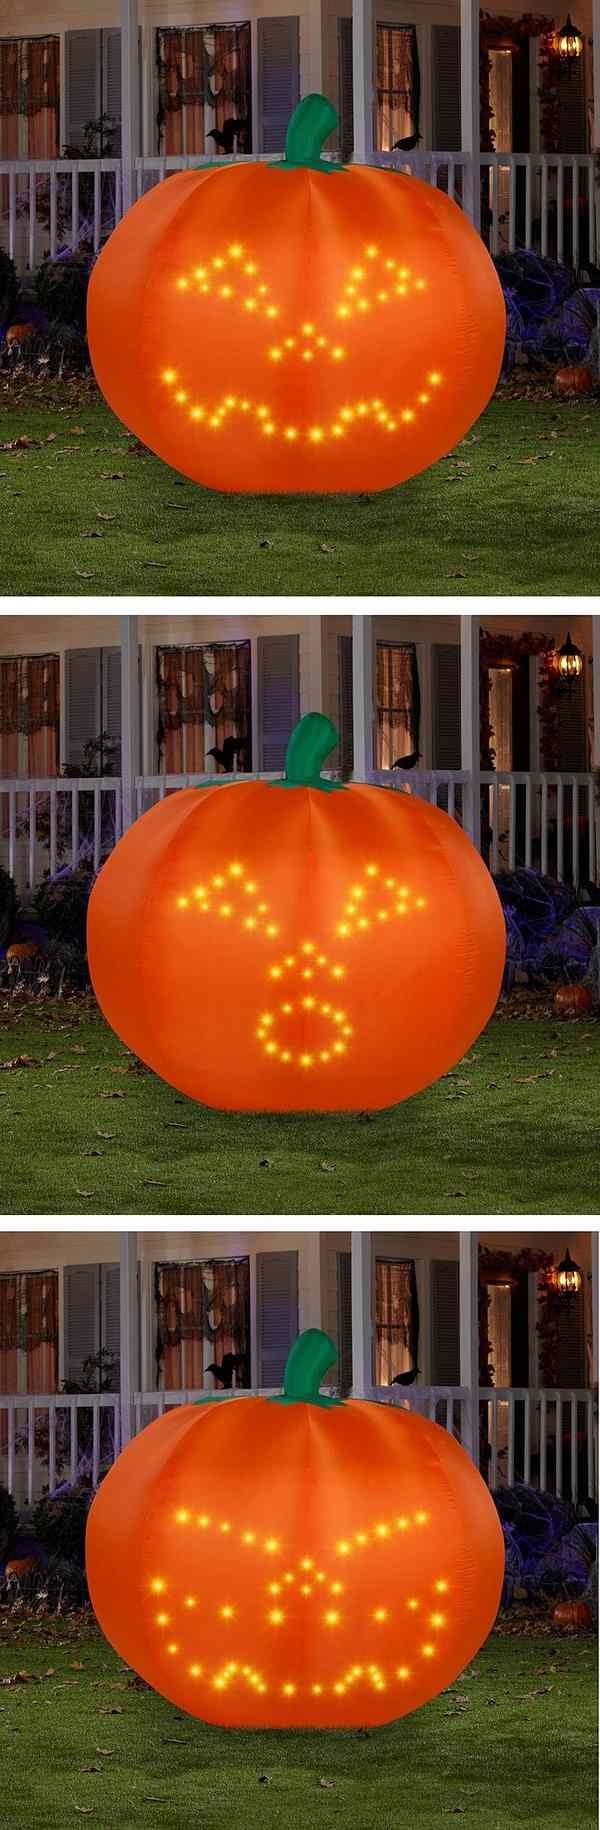 halloween inflatables garden decorating ideas pumpkin faces